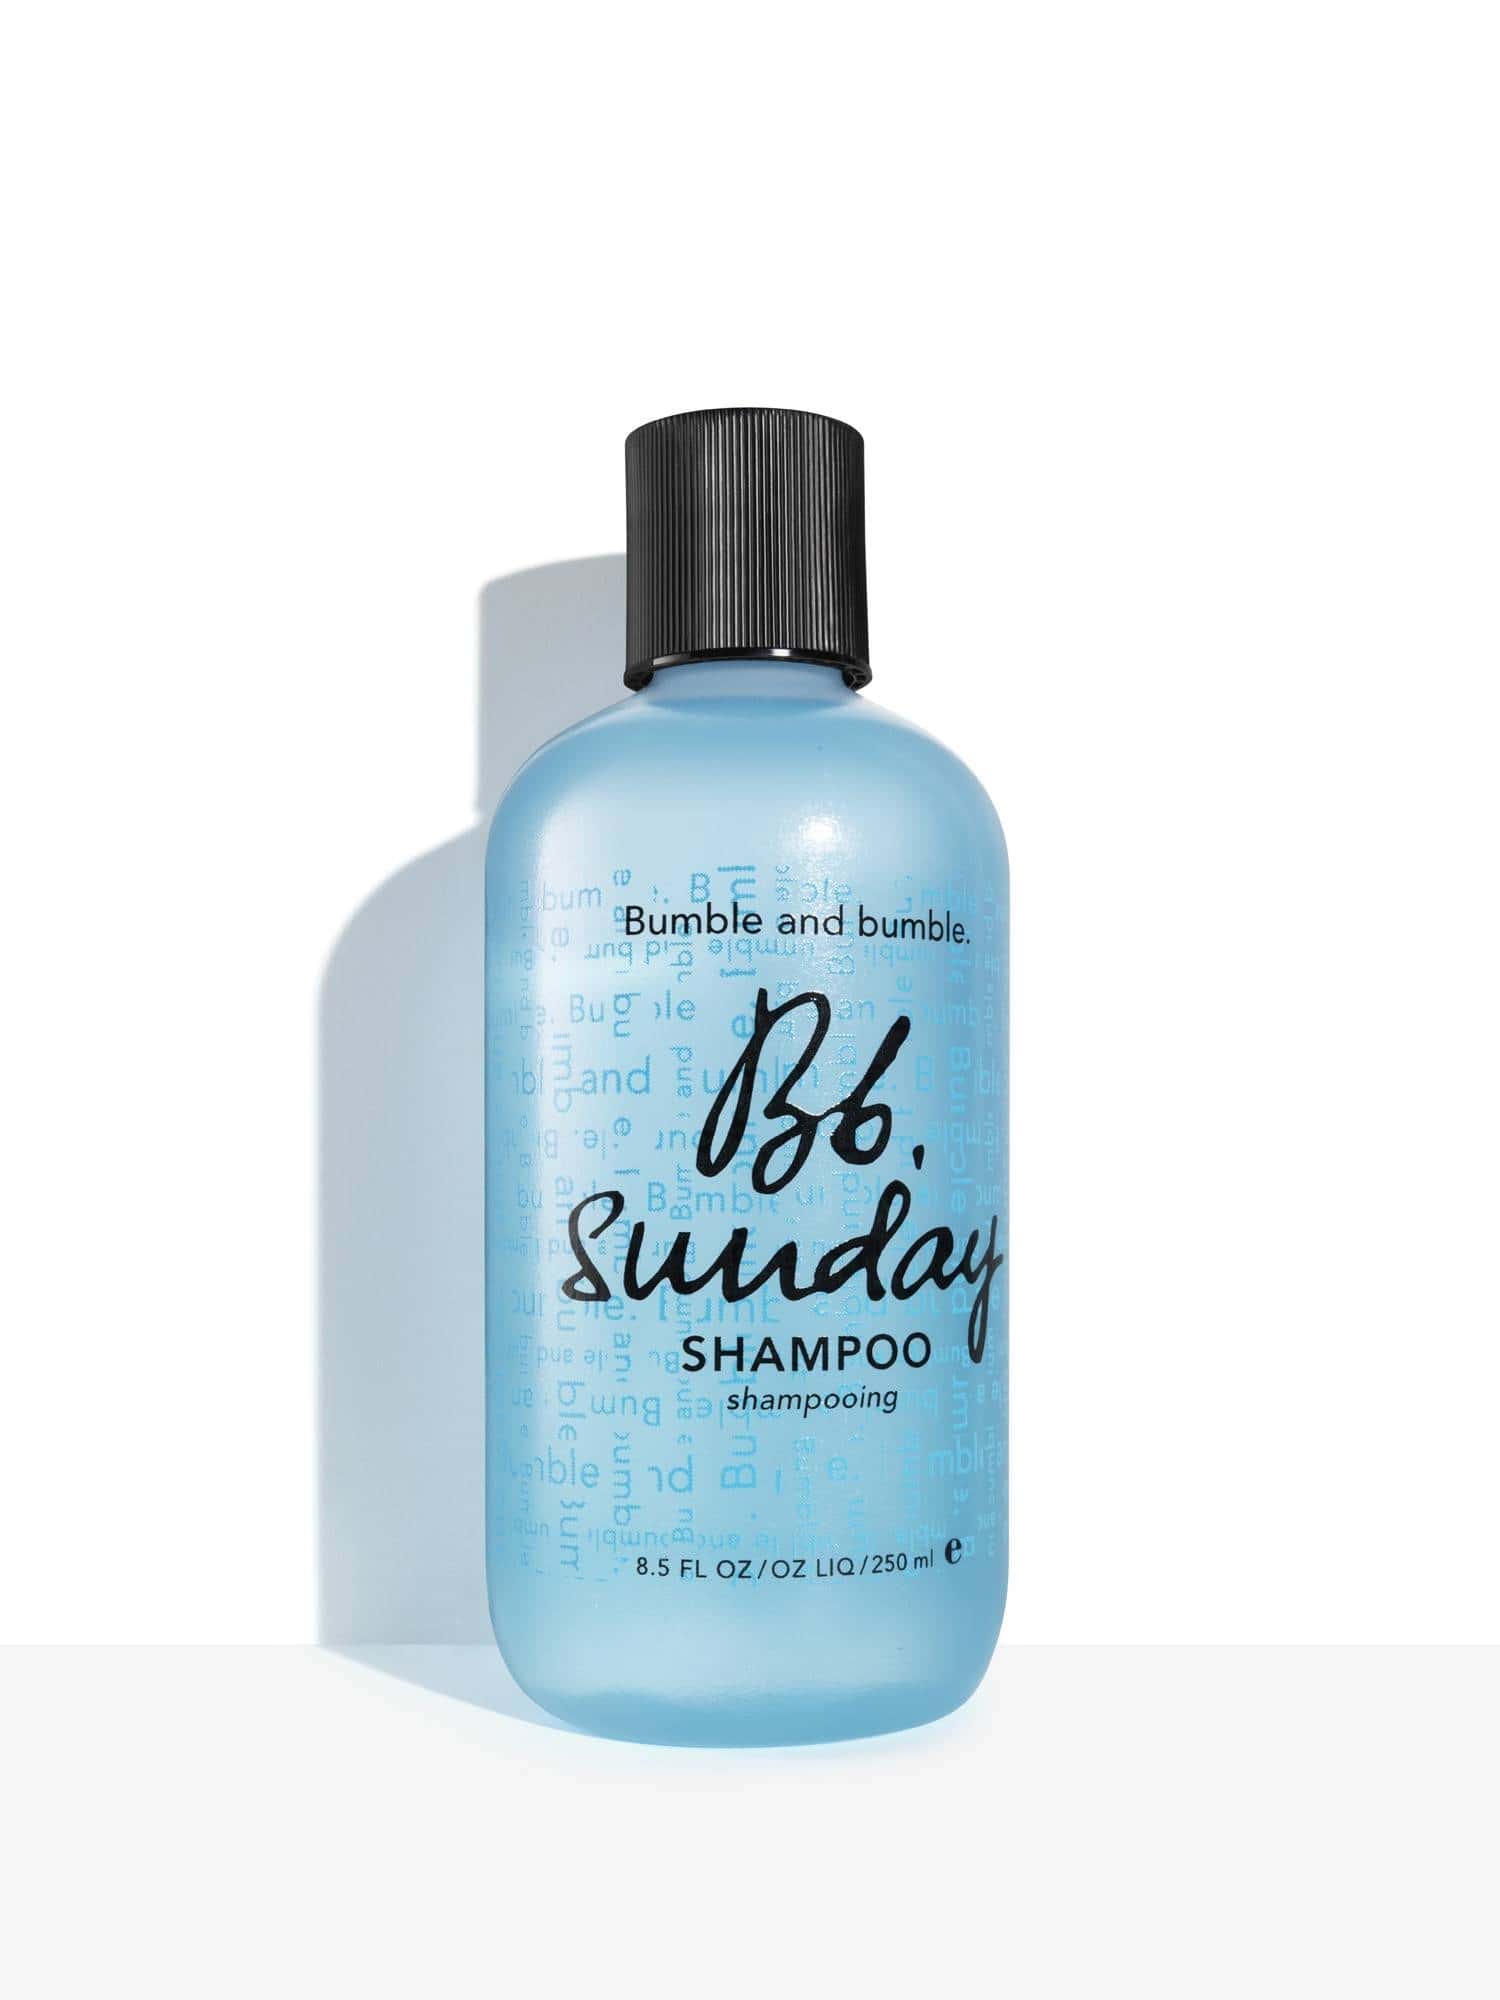 Bumble and bumble Bb. Sunday Shampoo 